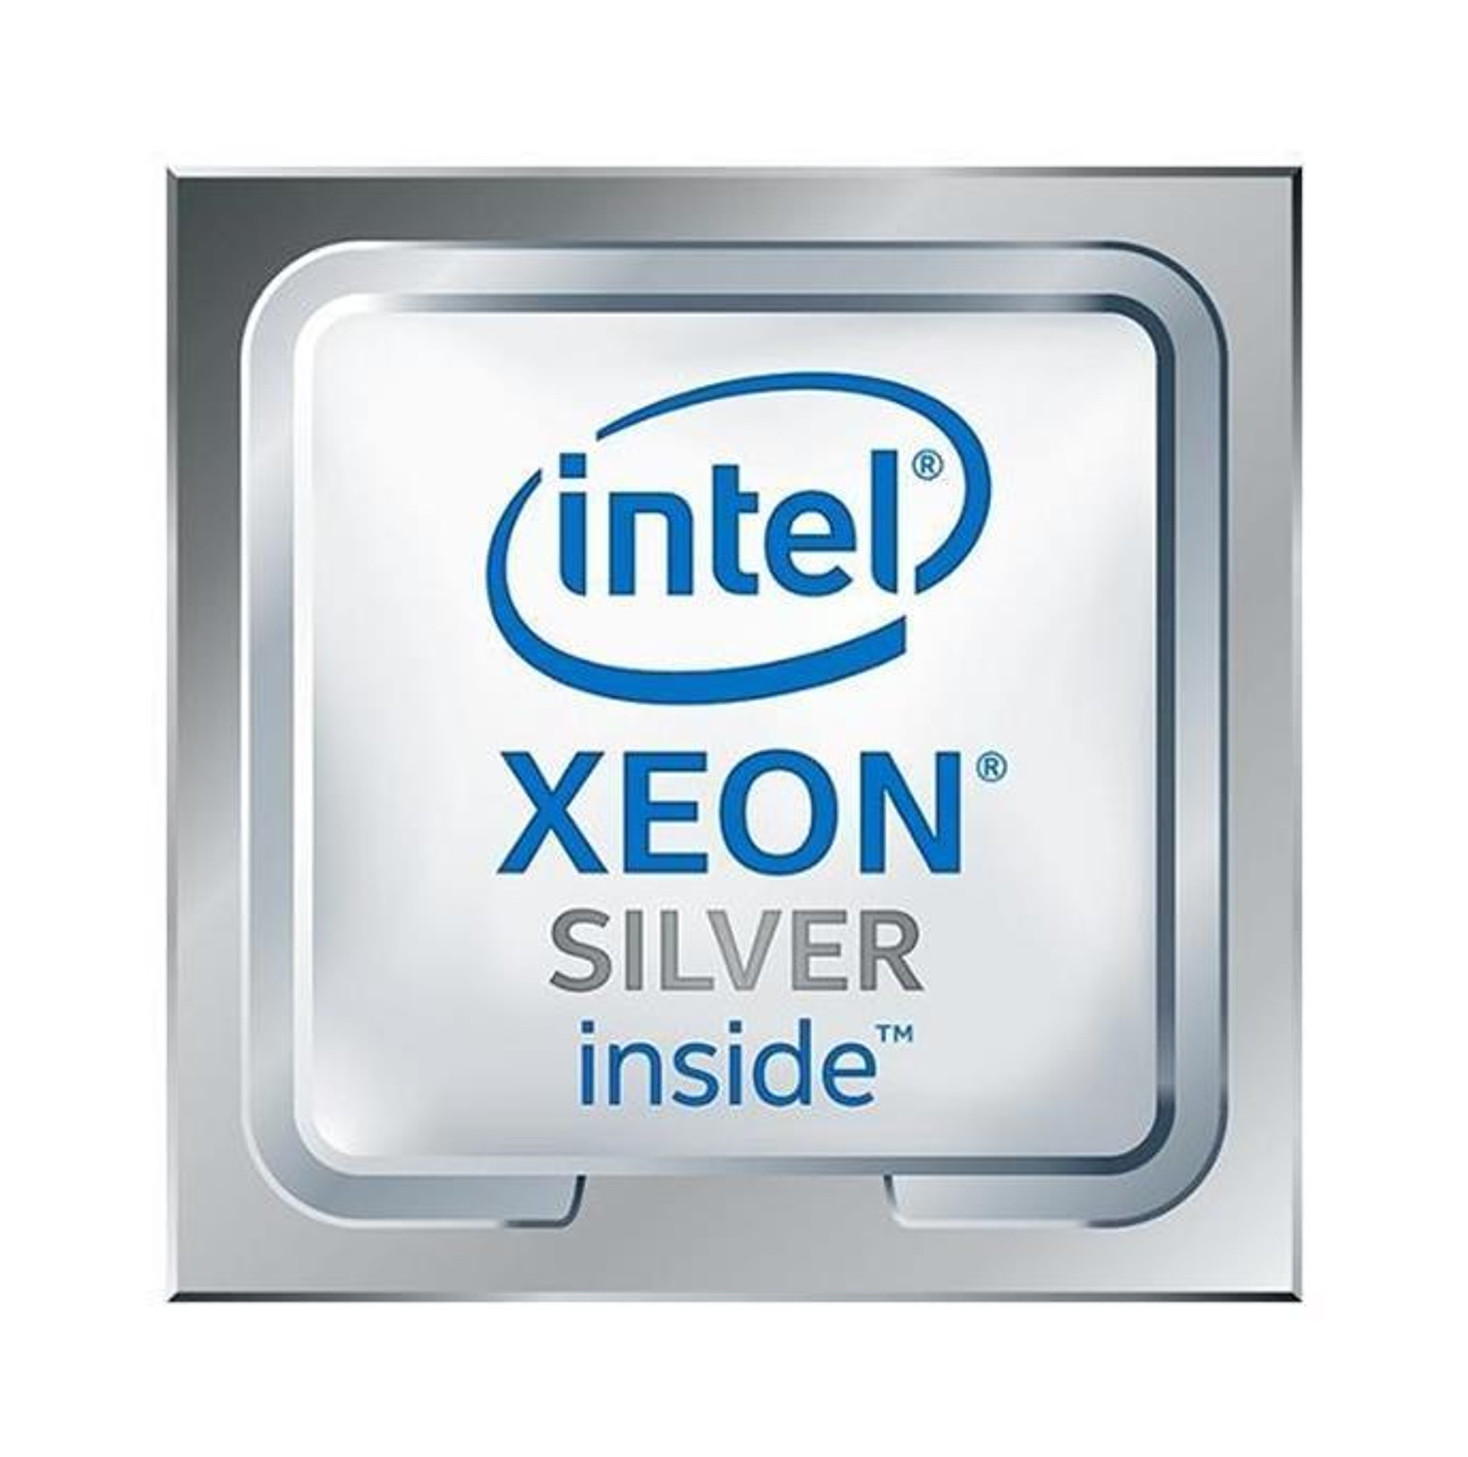 Intel Xeon Silver 4208 2.1GHz 8C 16T 11M Cache Sockets FCLGA3647 SRFBM